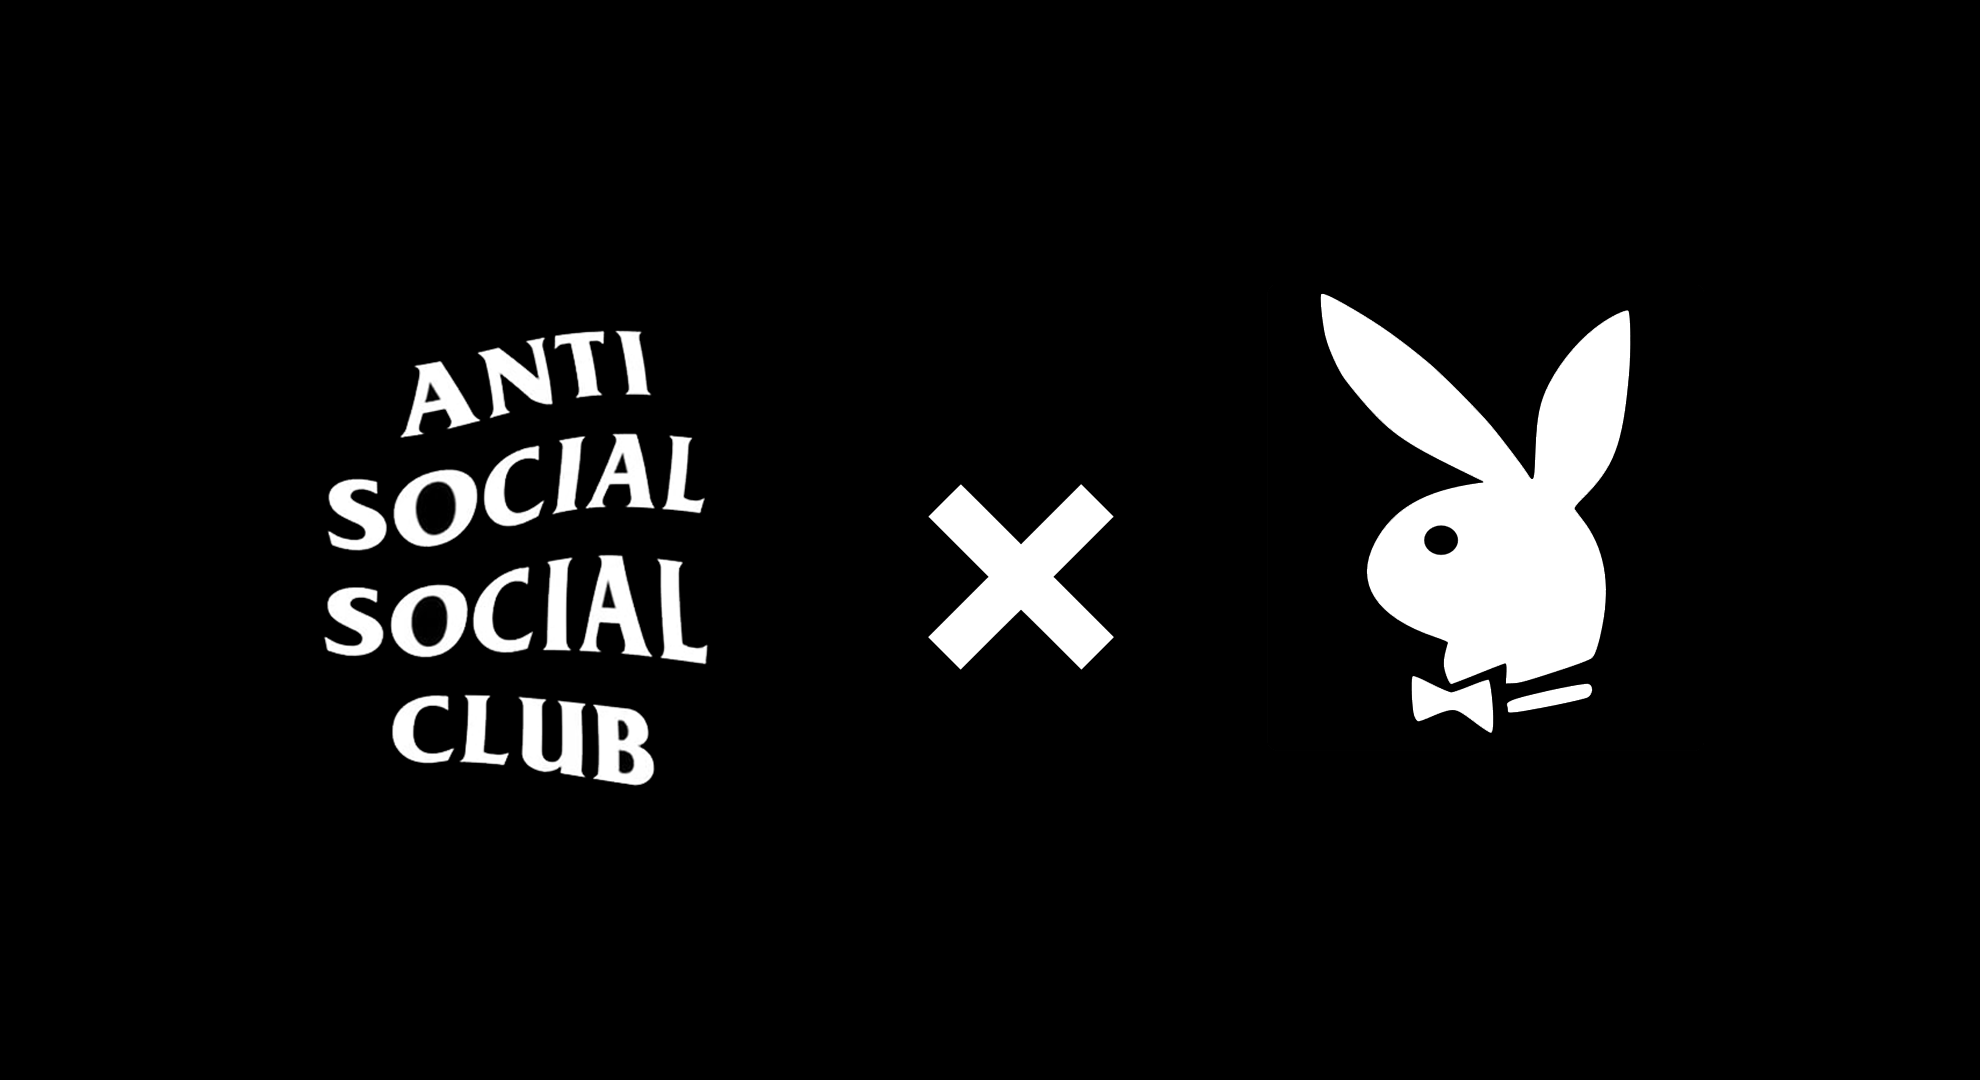 Anti Social Social Club  antisocialsocialclub  Instagram photos and  videos